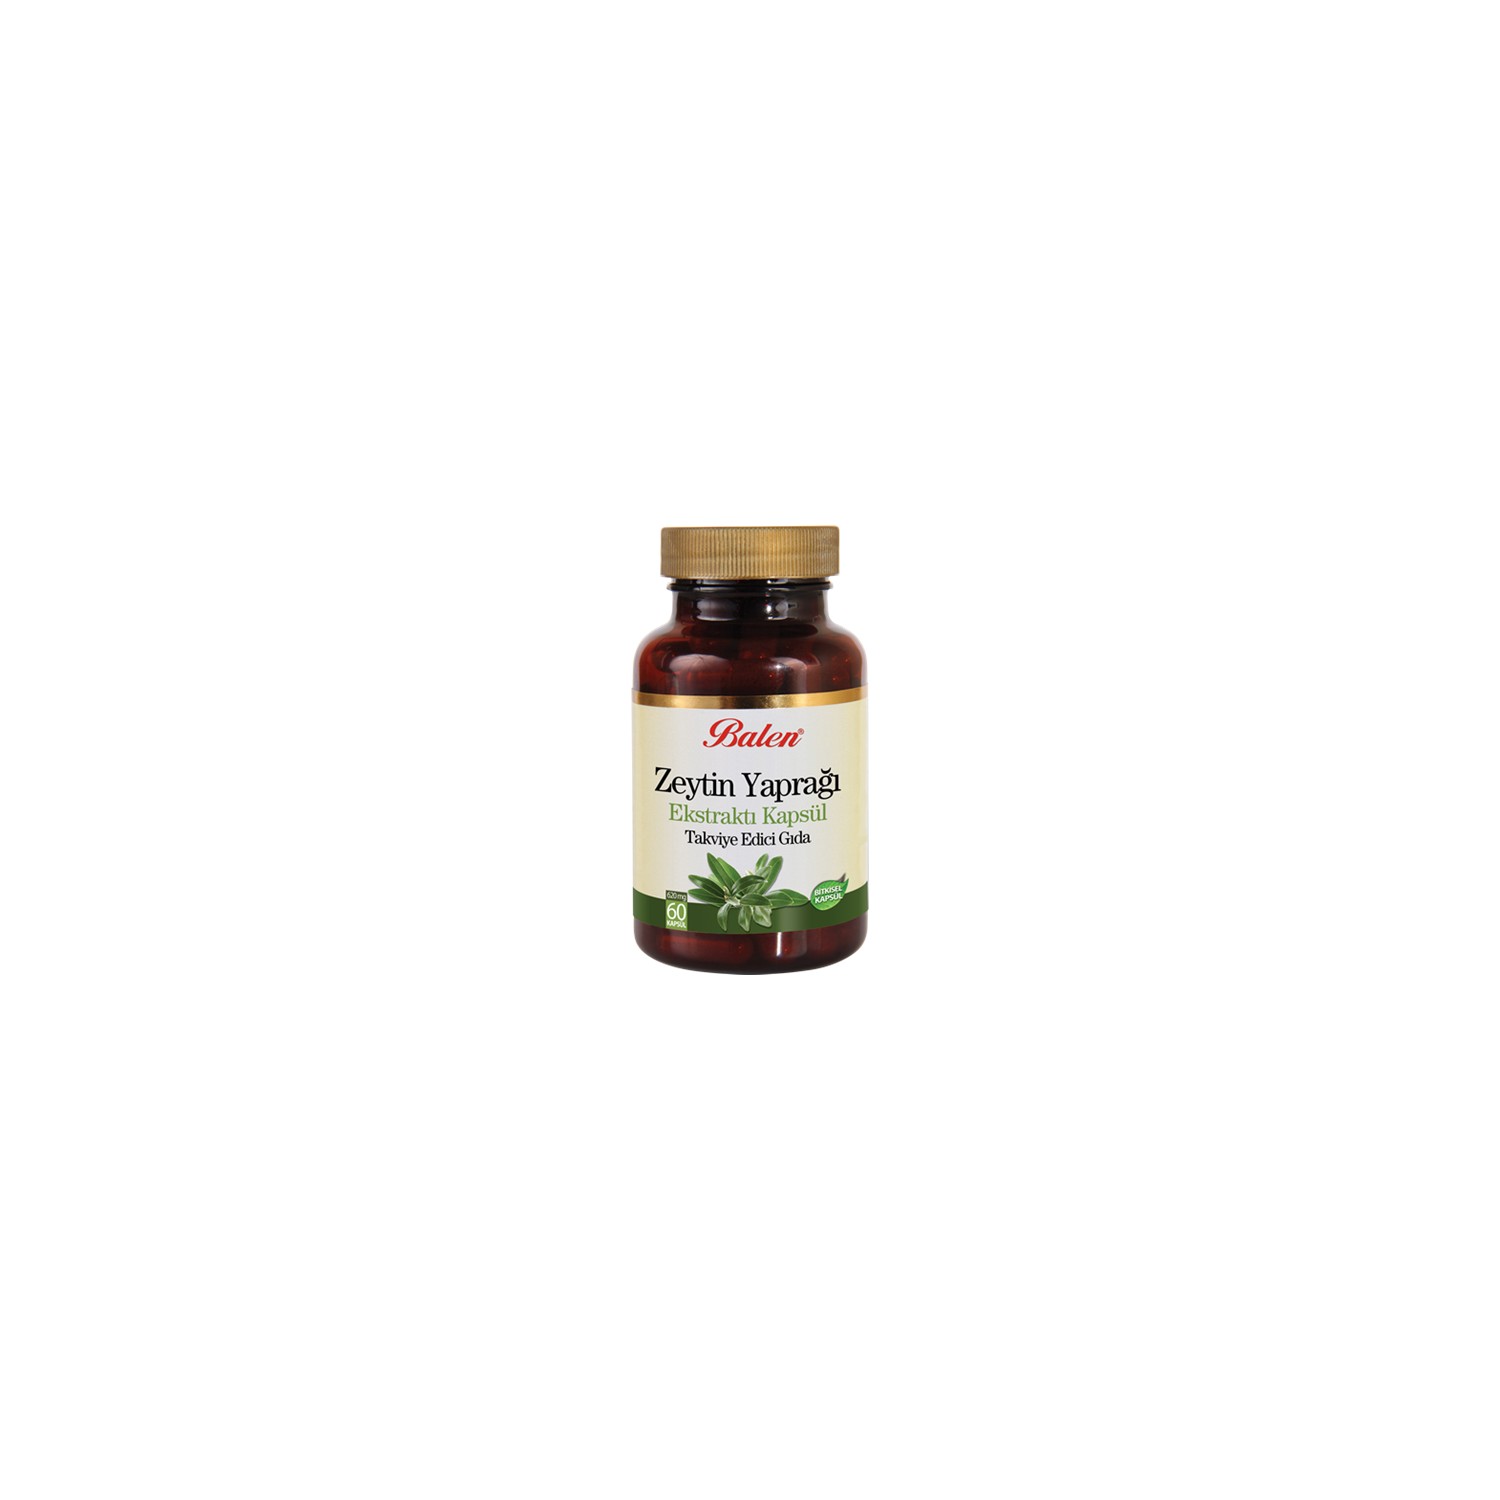 Пищевая добавка Balen Olive Leaf 620 мг, 2 упаковки по 60 капсул пищевая добавка snap supplements olive leaf максимальная сила 60 капсул